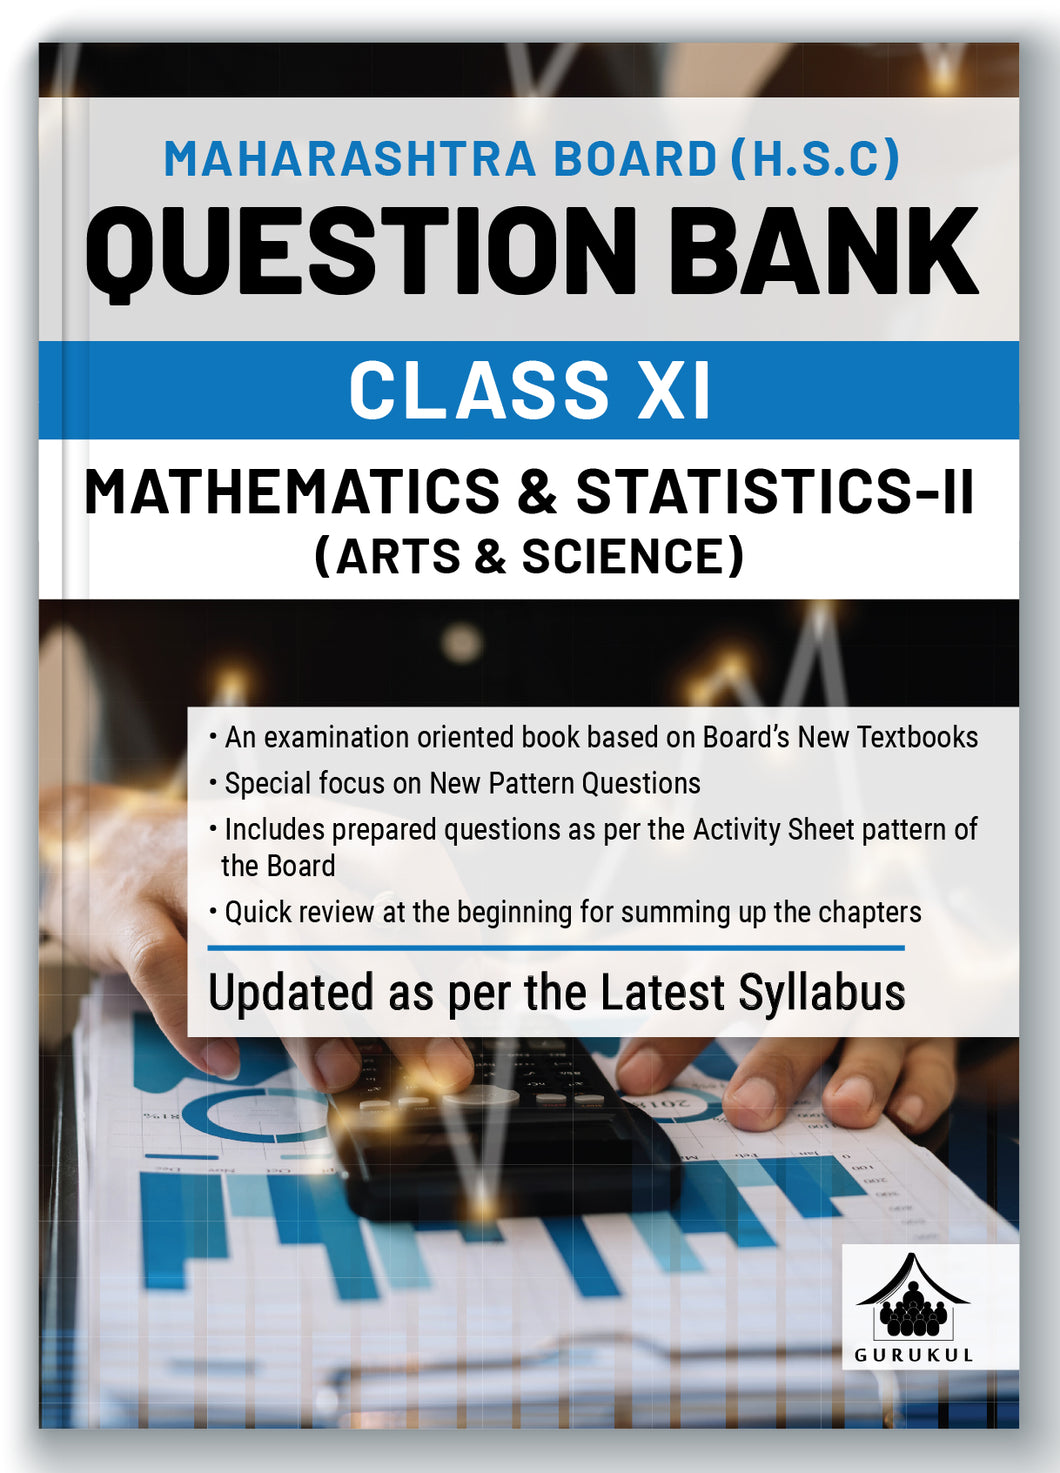 Gurukul H.S.C Mathematics & Statistics - II Question Bank for MH Board Class 11